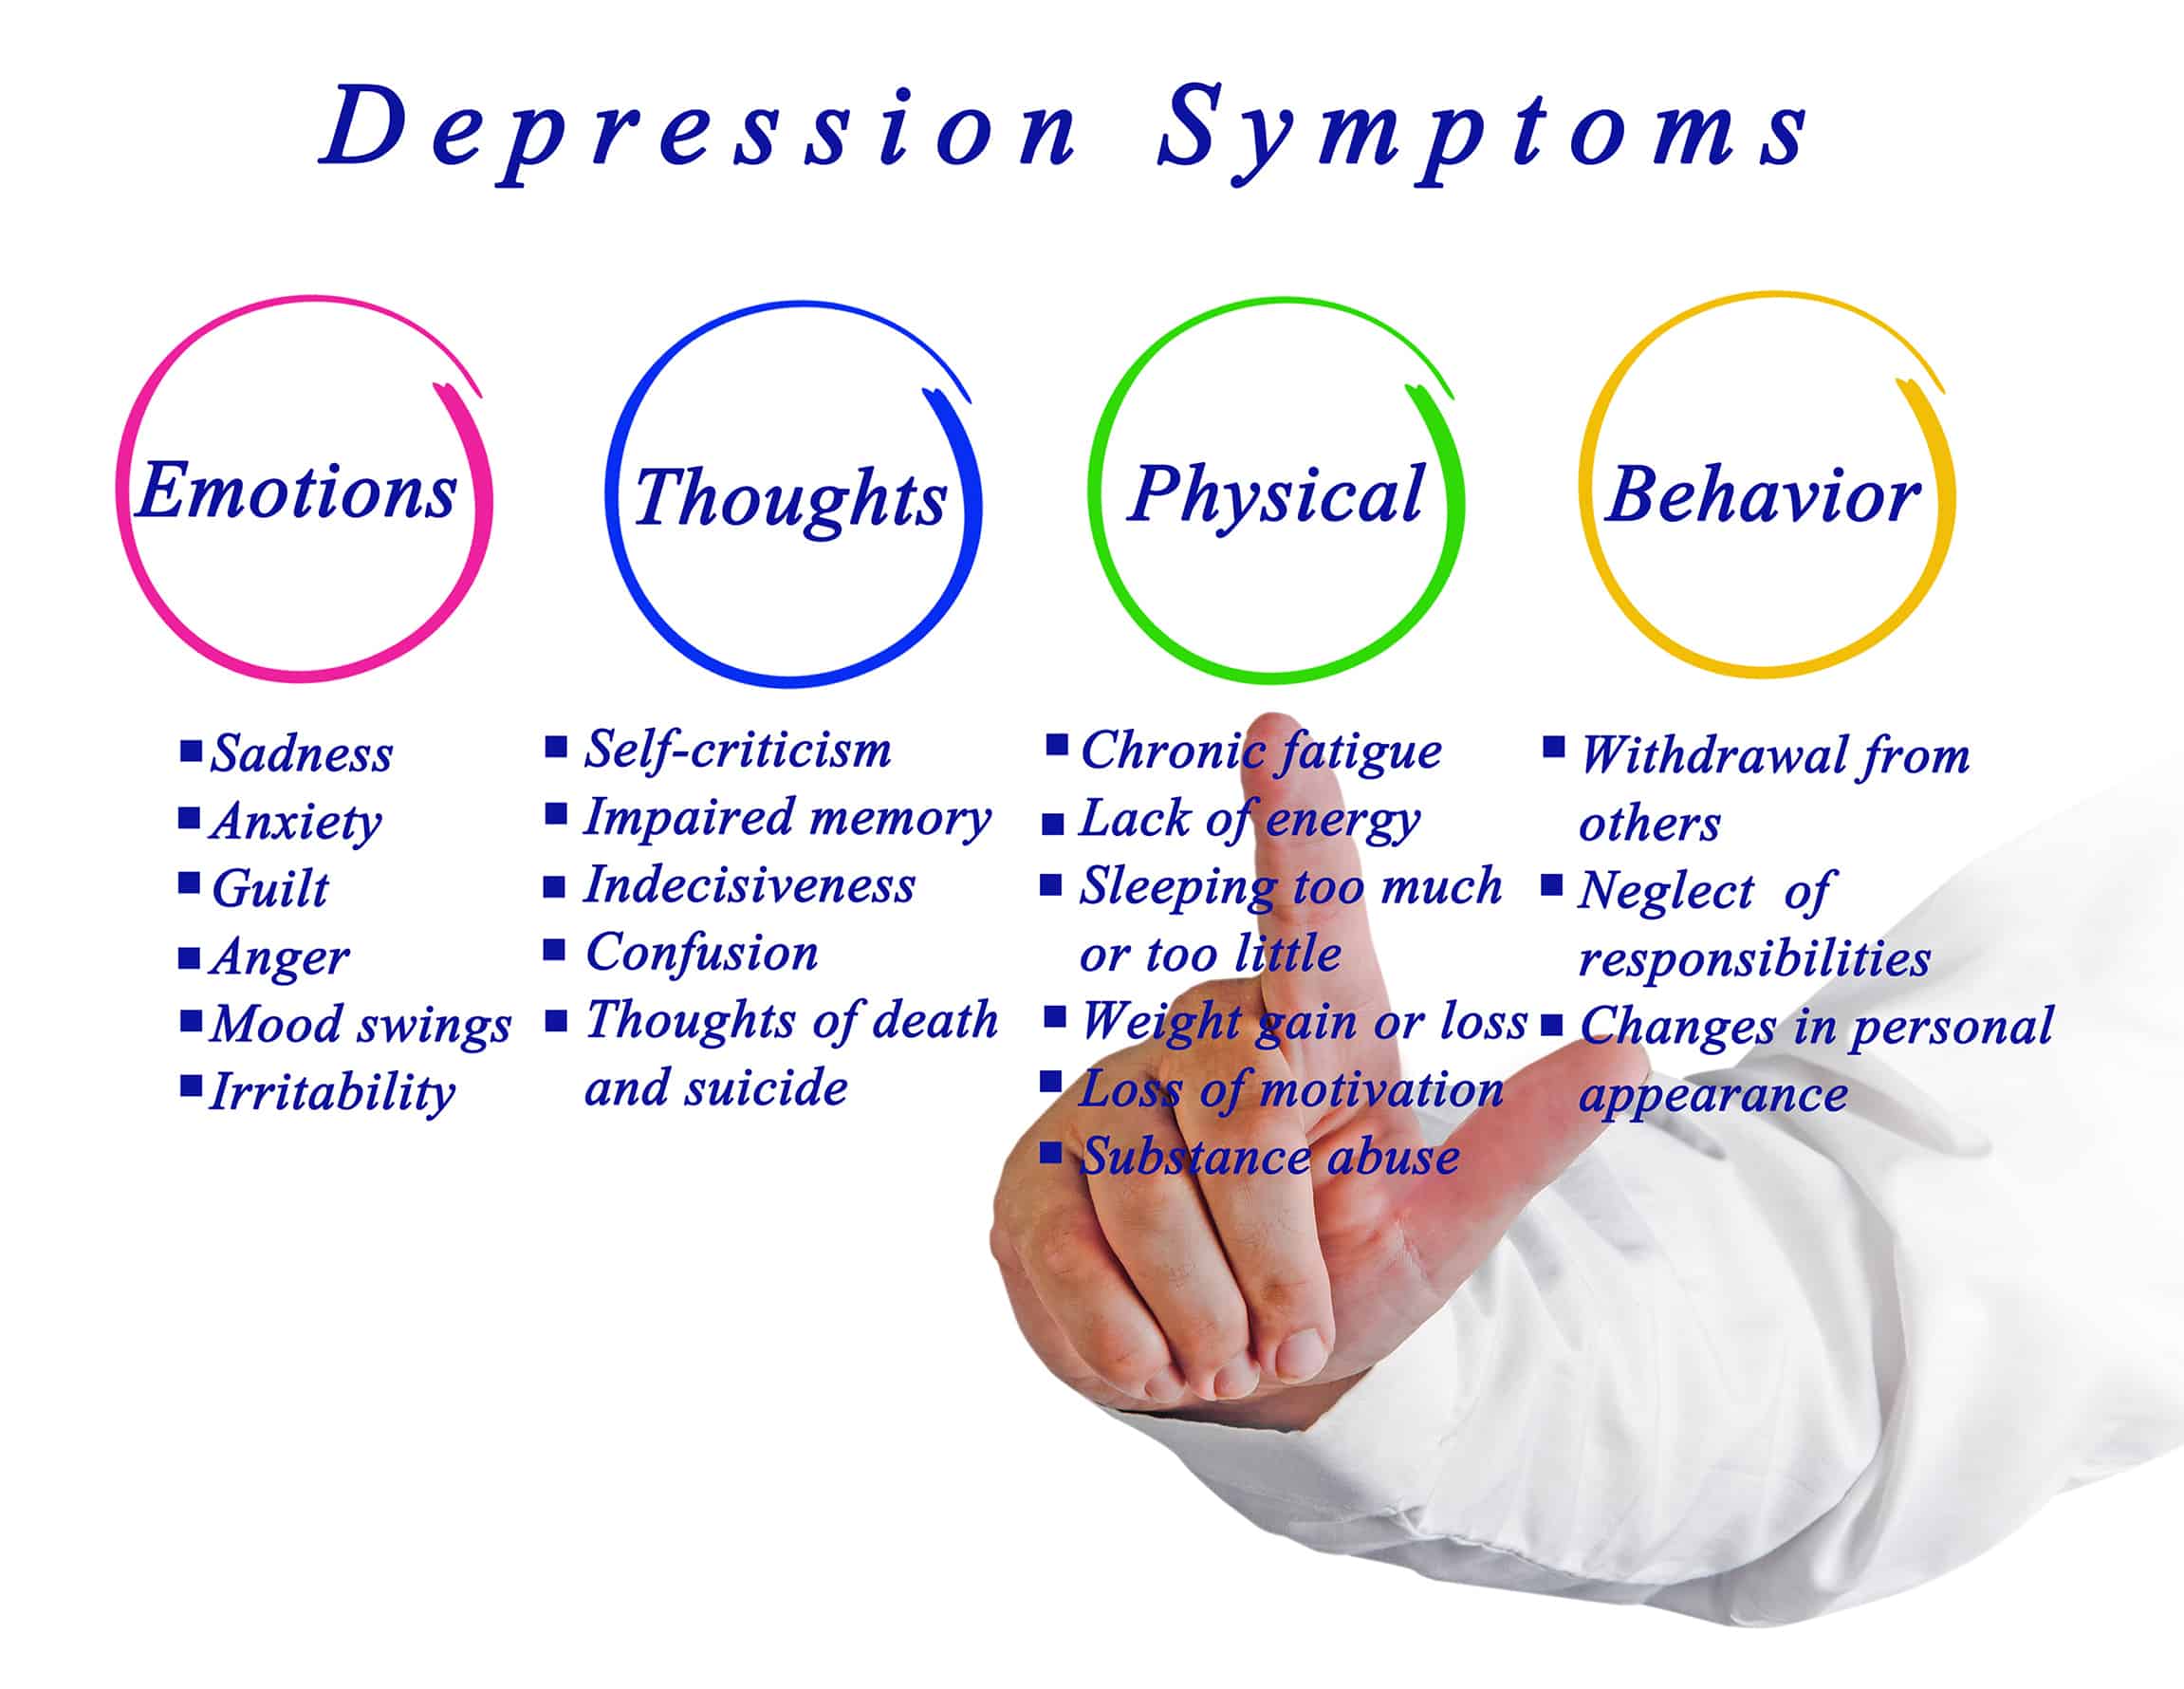 Symptoms of Depression in Veterans